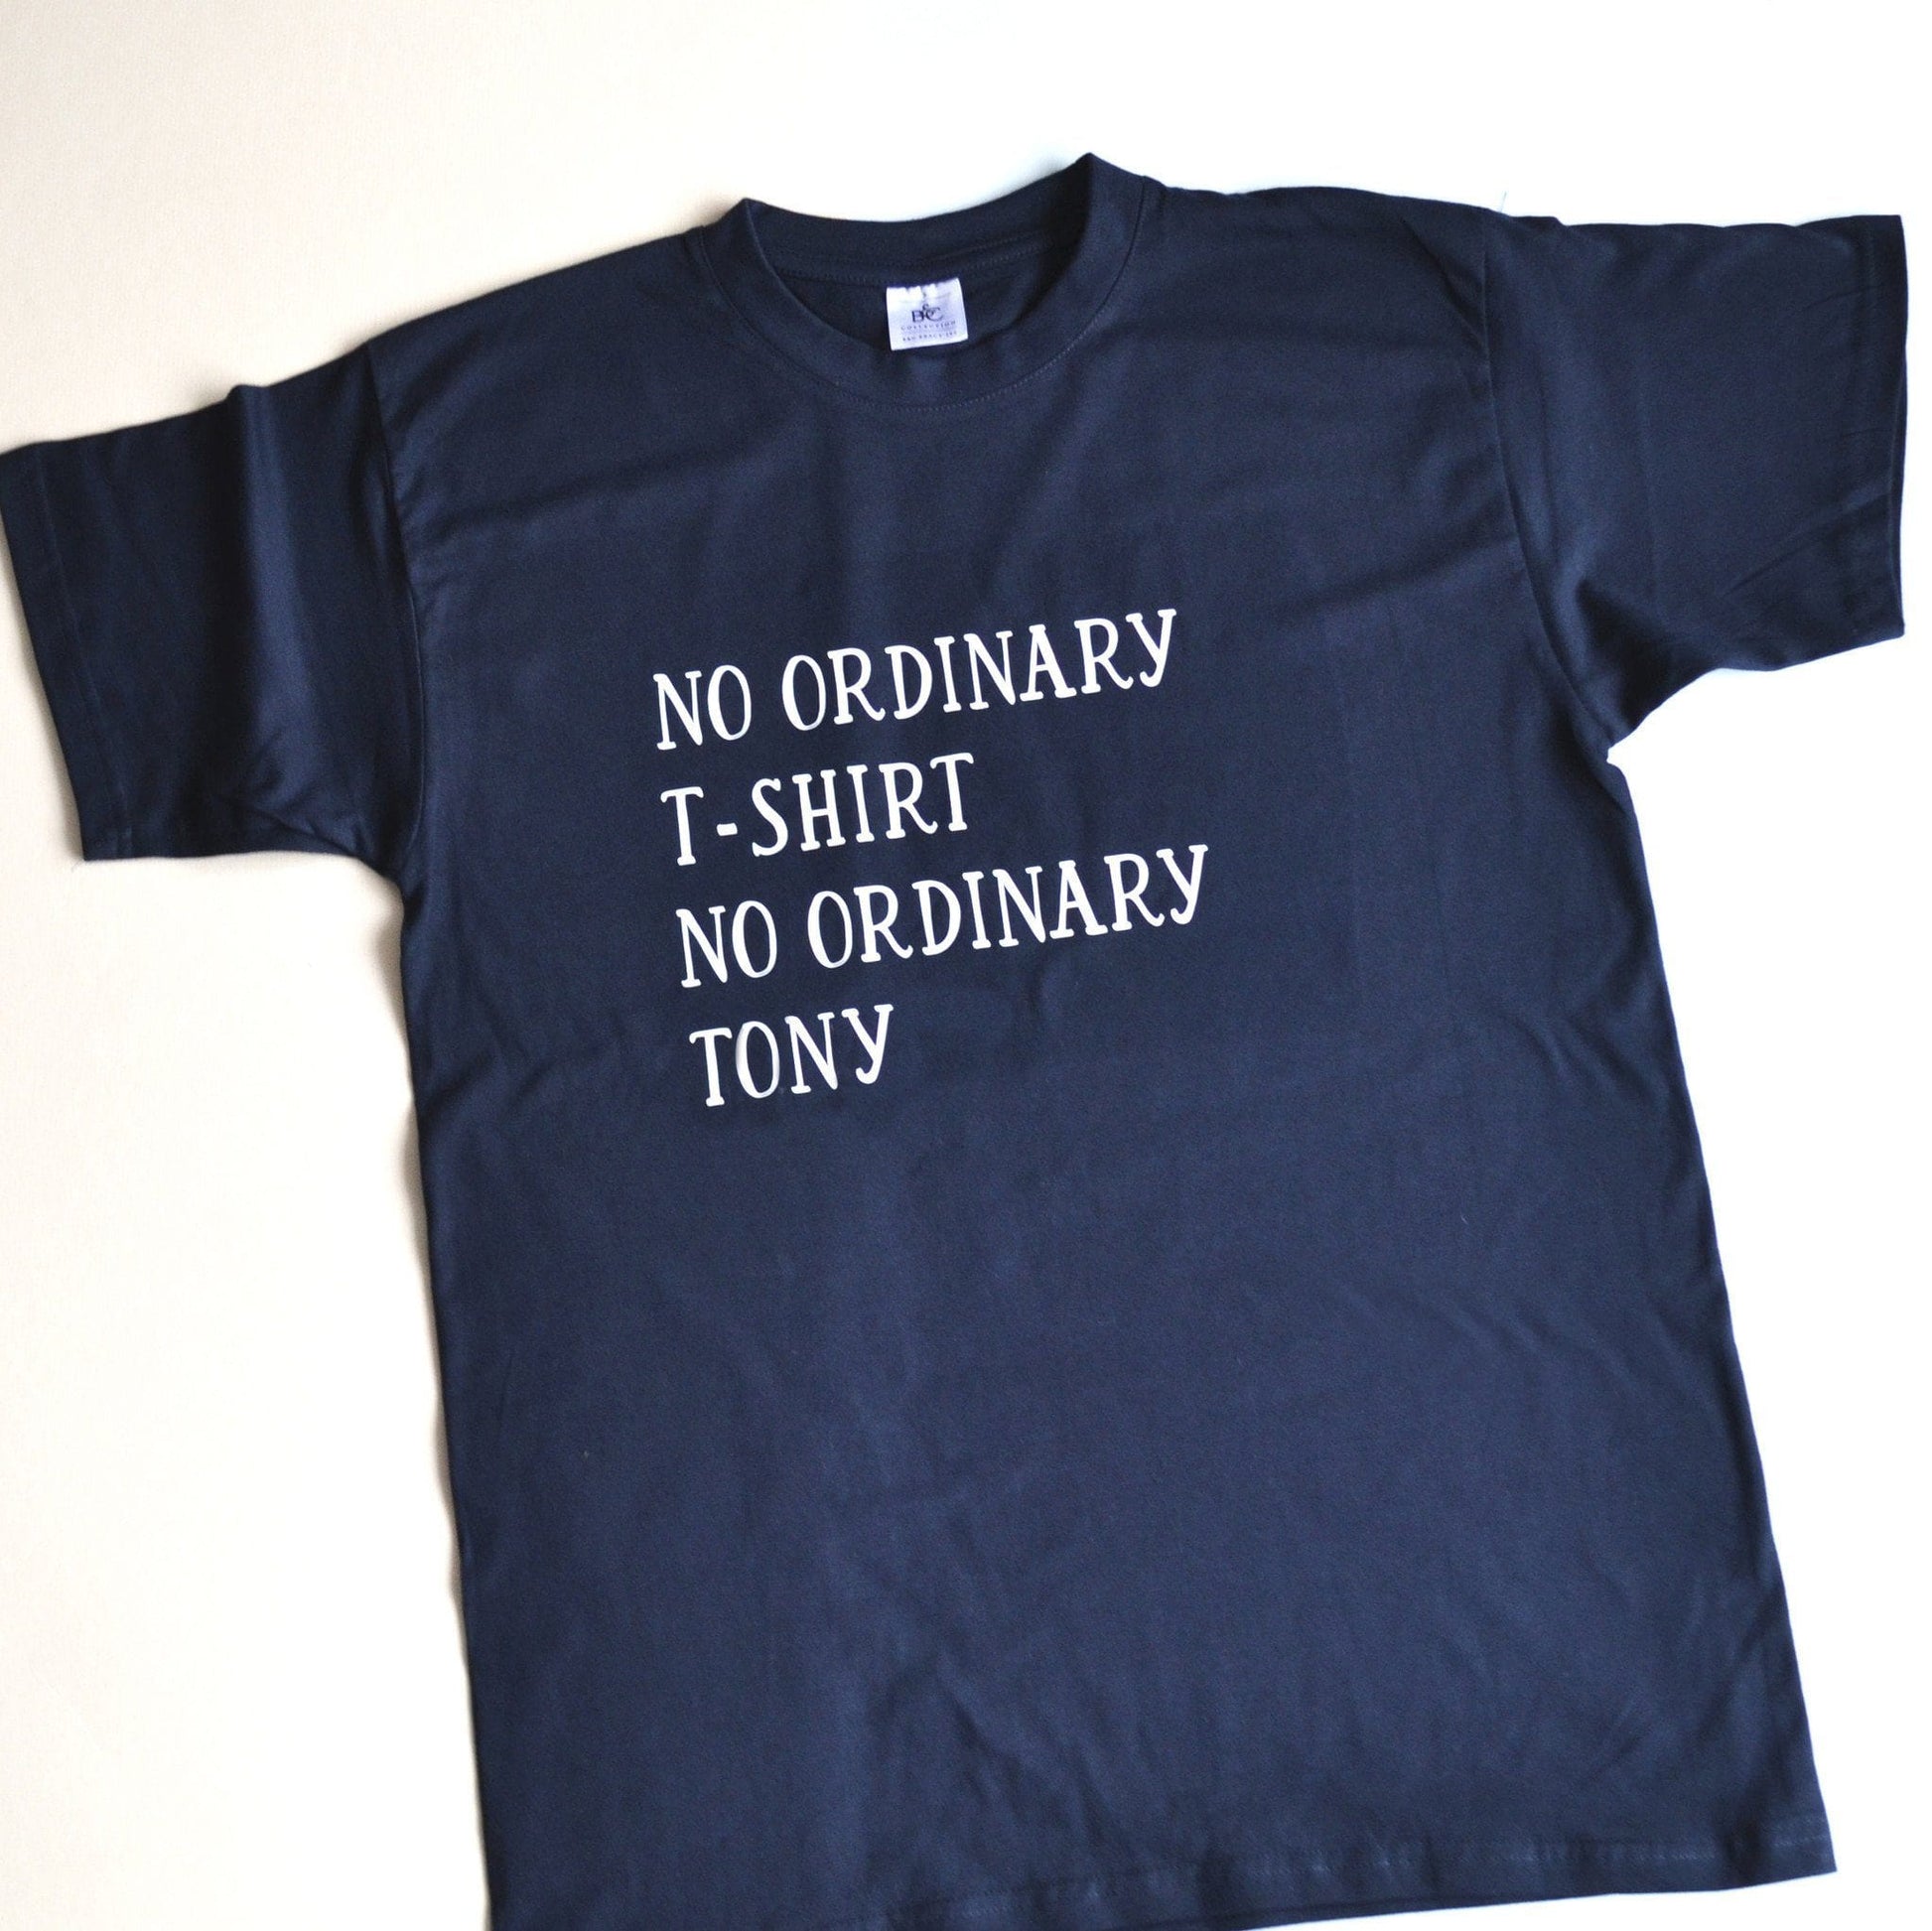 No Ordinary Dad T Shirt, t-shirt, - ALPHS 